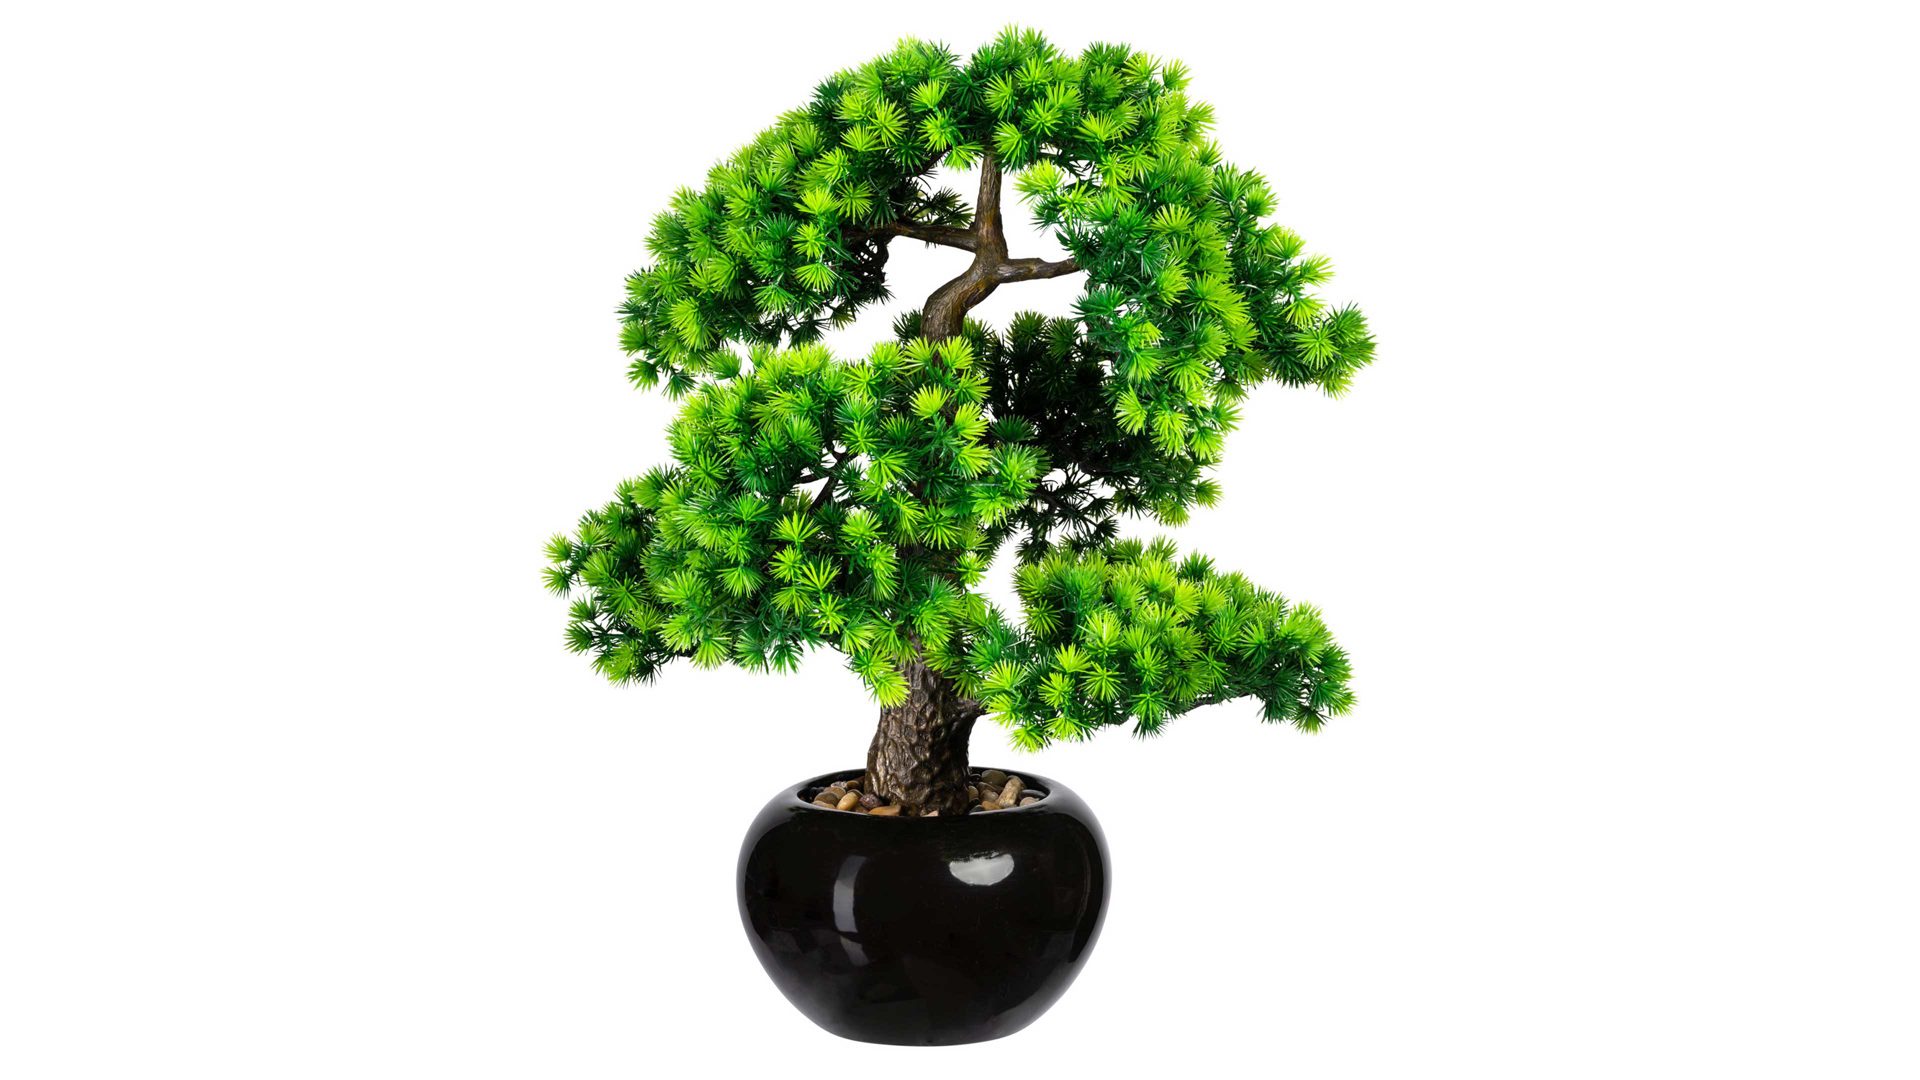 Pflanze Gasper aus Kunststoff in Grün Bonsai Lärche grüner Kunststoff & schwarzer Keramiktopf – Höhe ca. 48 cm